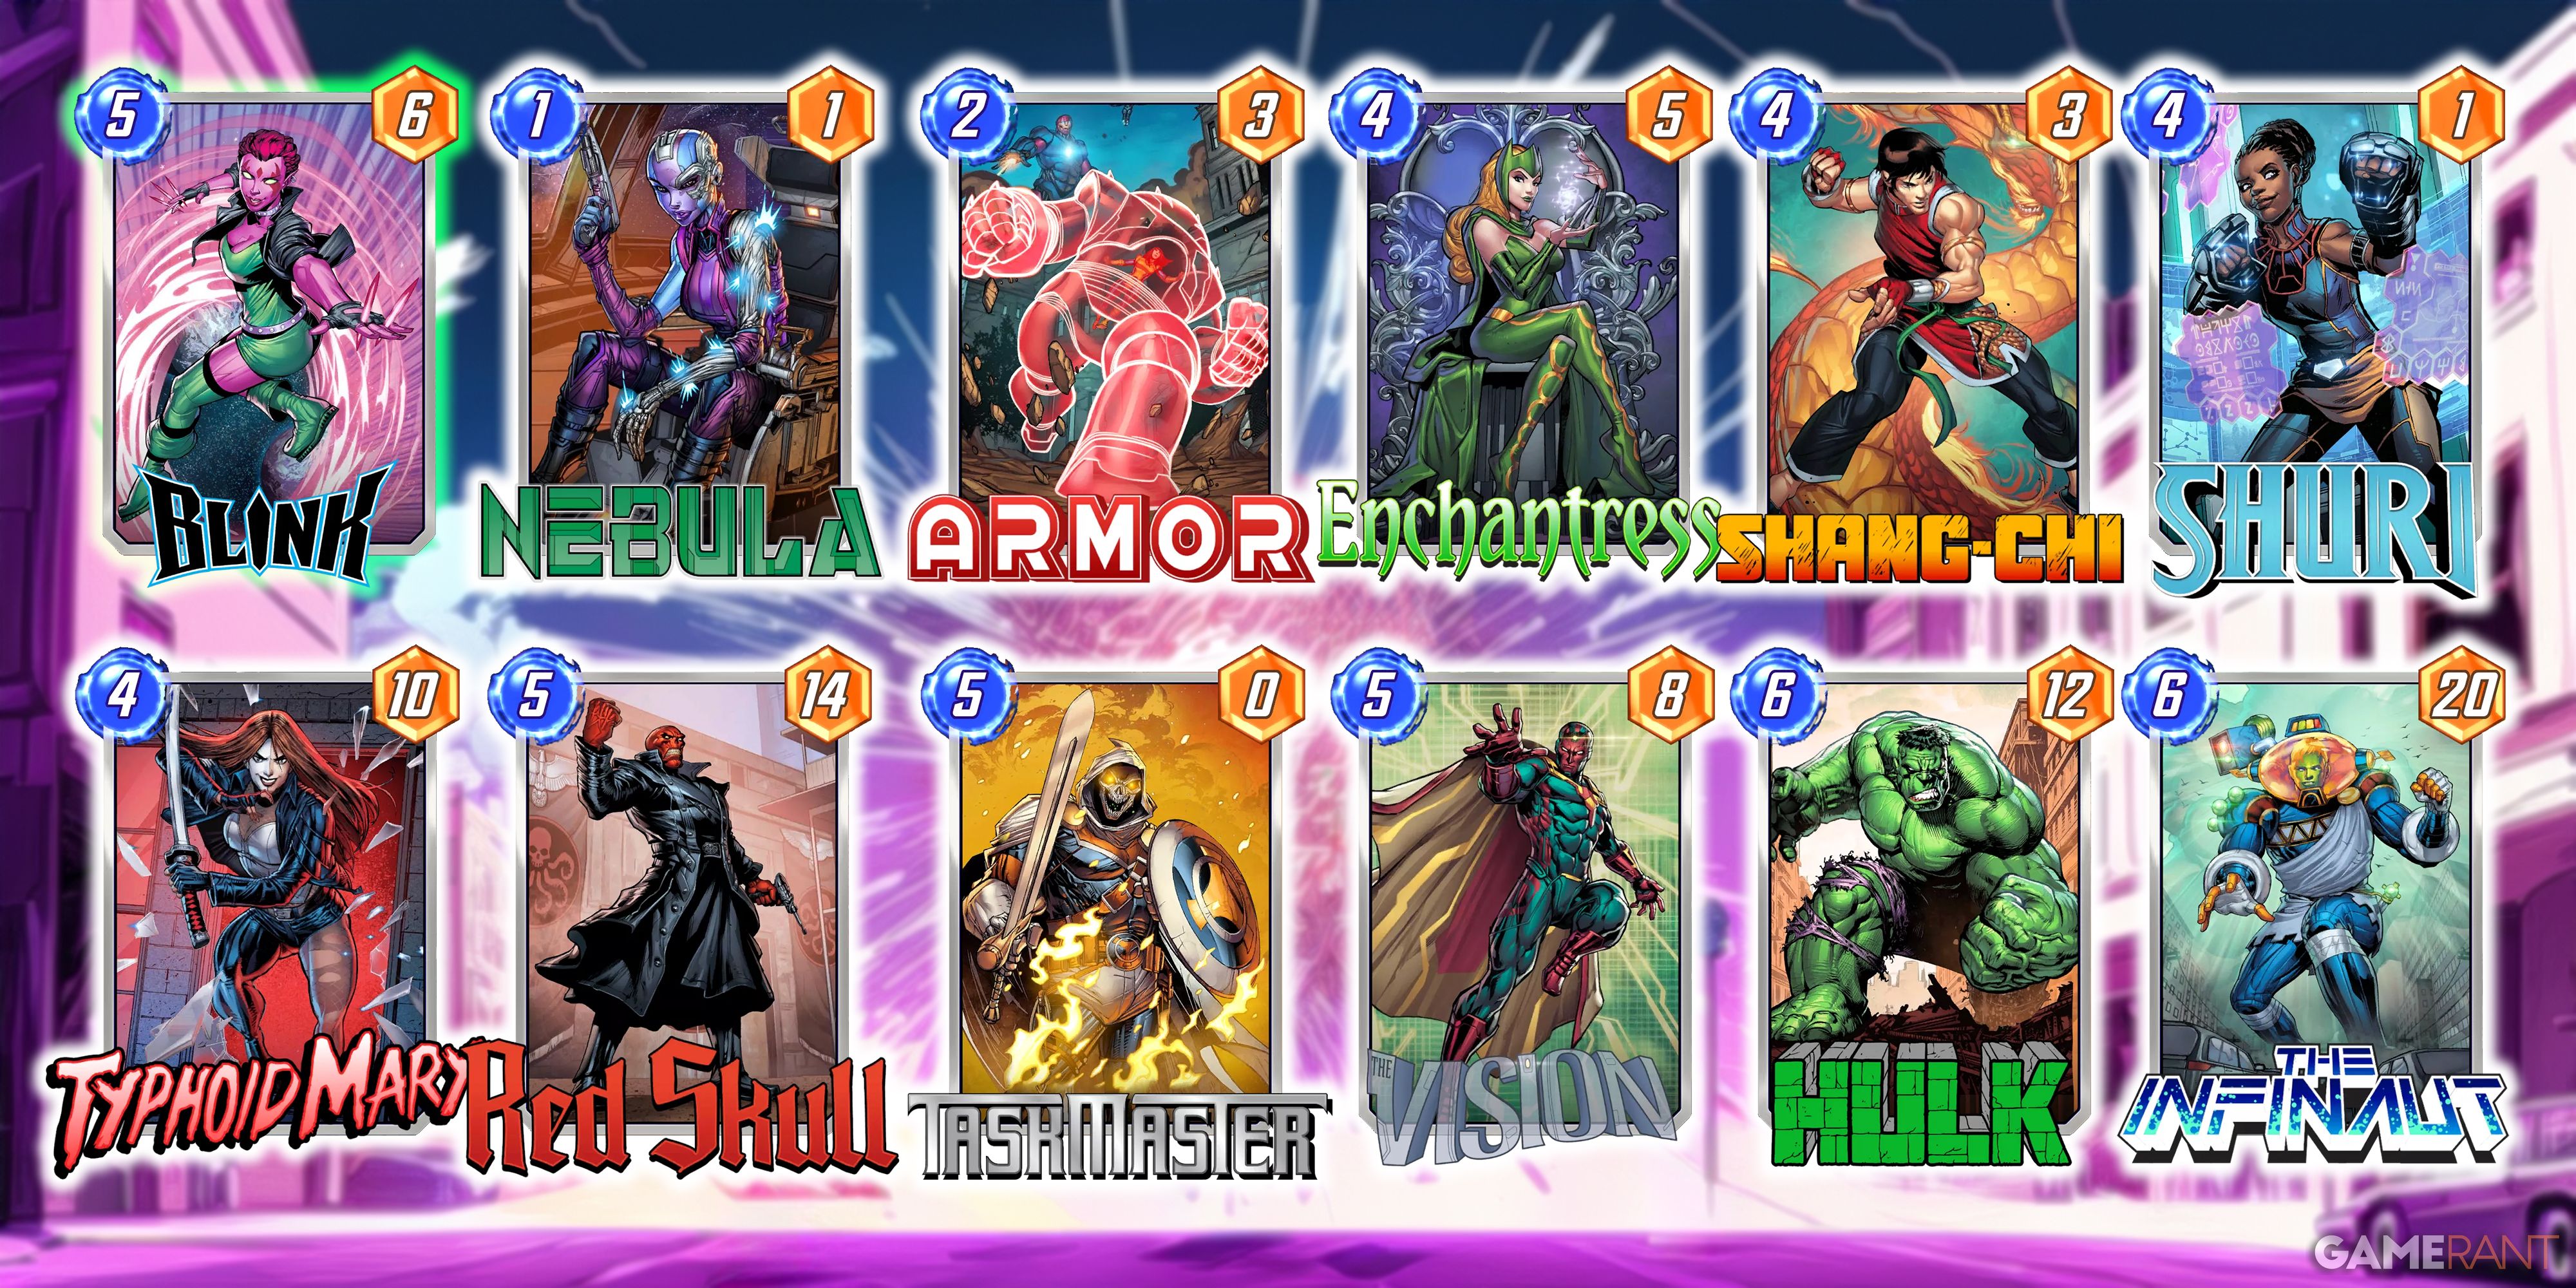 A Marvel Snap deck consisting of Blink, Nebula, Armor, Enchantress, Shang-Chi, Shuri, Typhoid Mary, Red Skull, Taskmaster, Vision, Hulk, and The Infinaut.